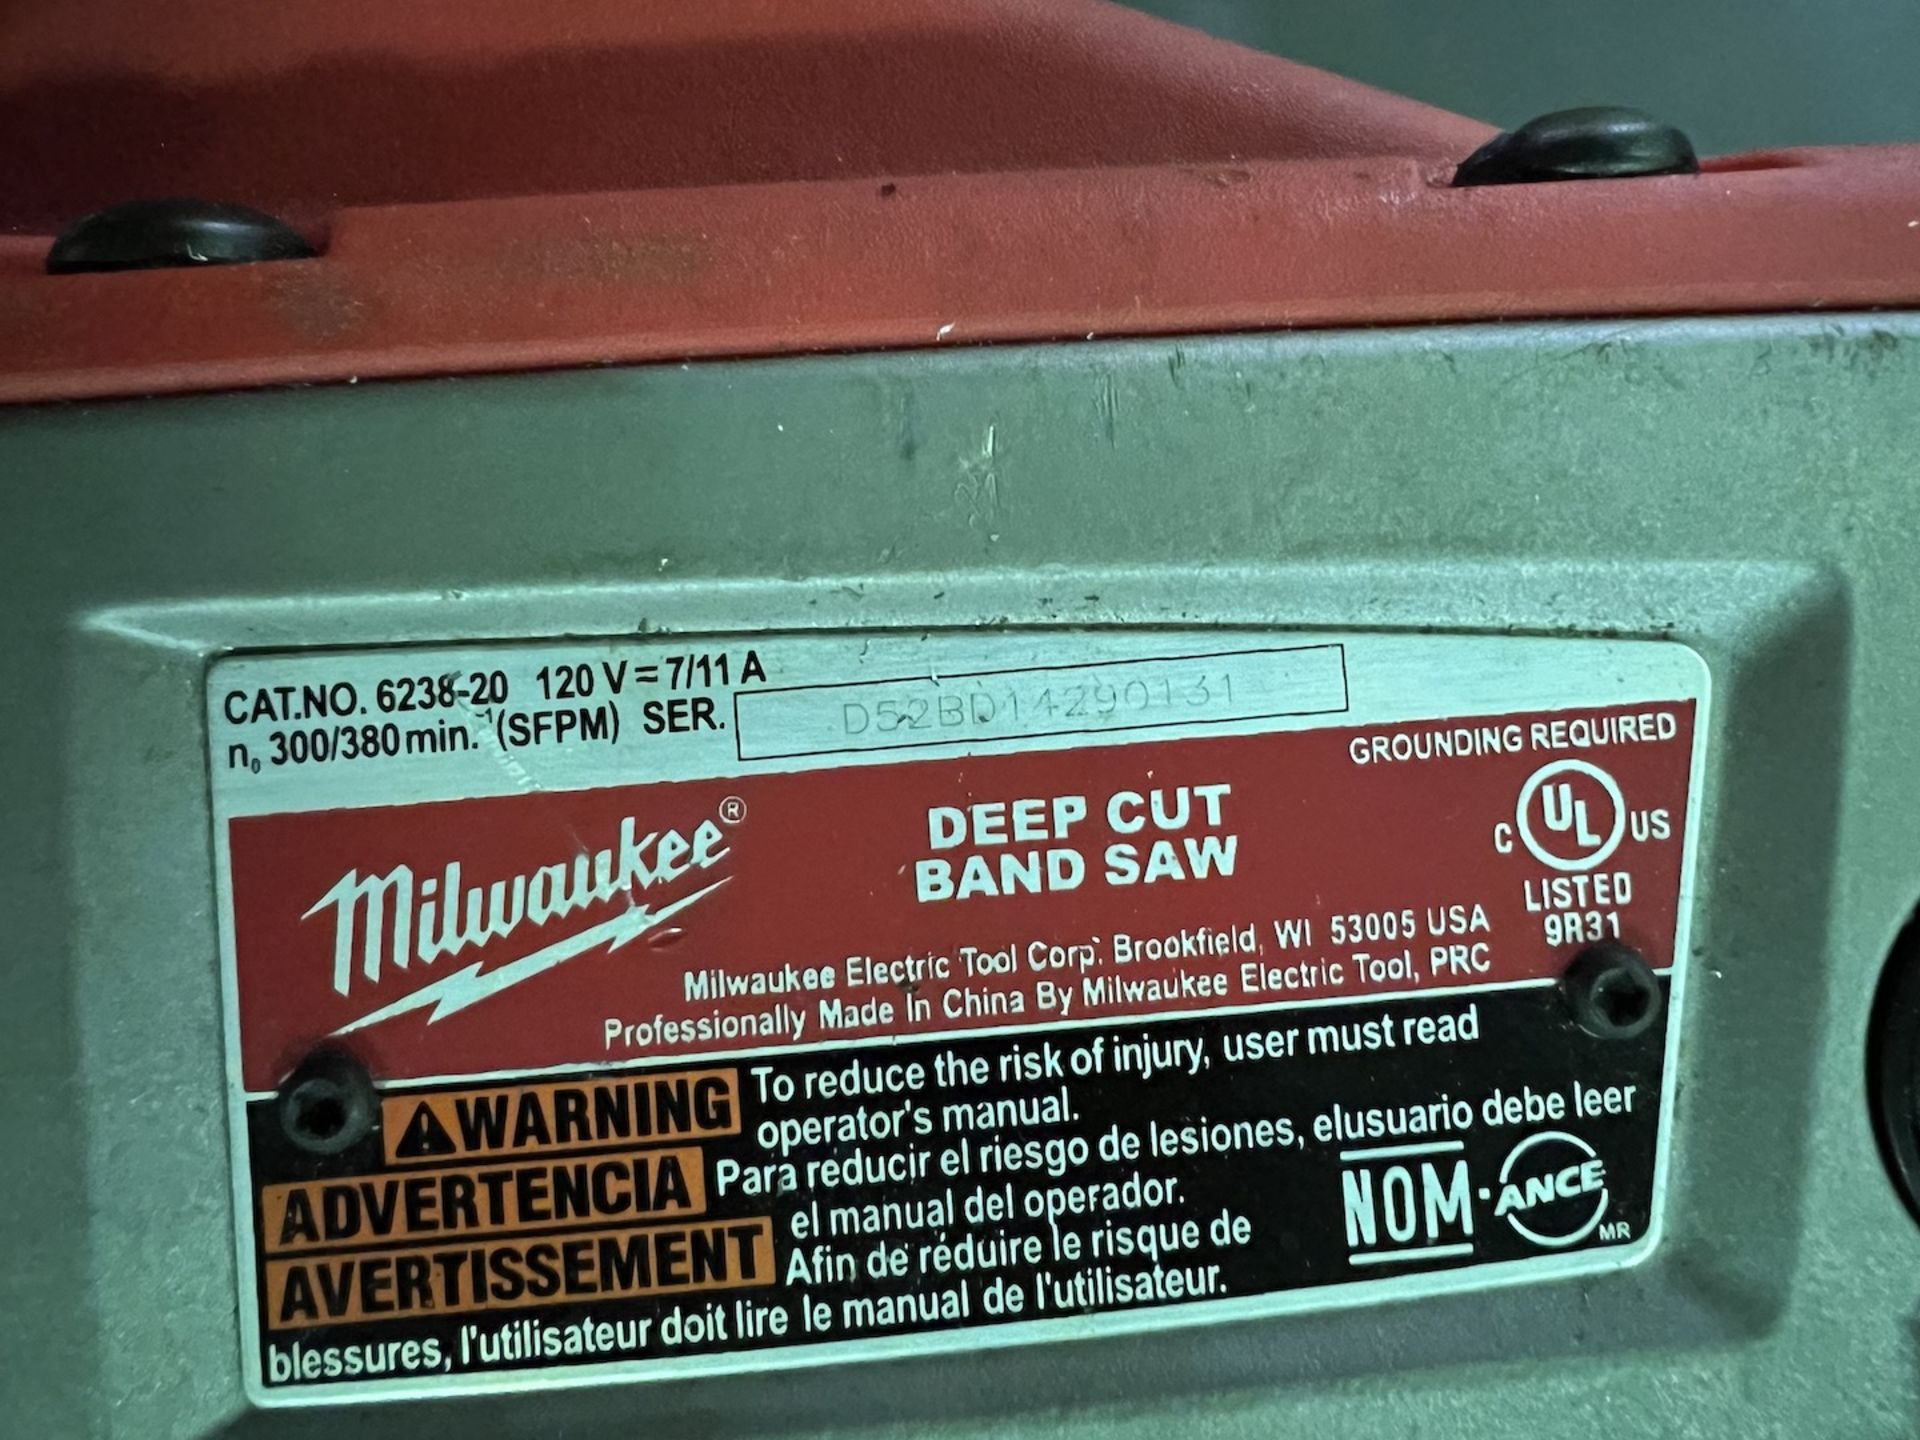 MILWAUKEE DEEP CUT BAND SAW, MODEL 6238-21, S/N D52BD14290131 - Image 4 of 12